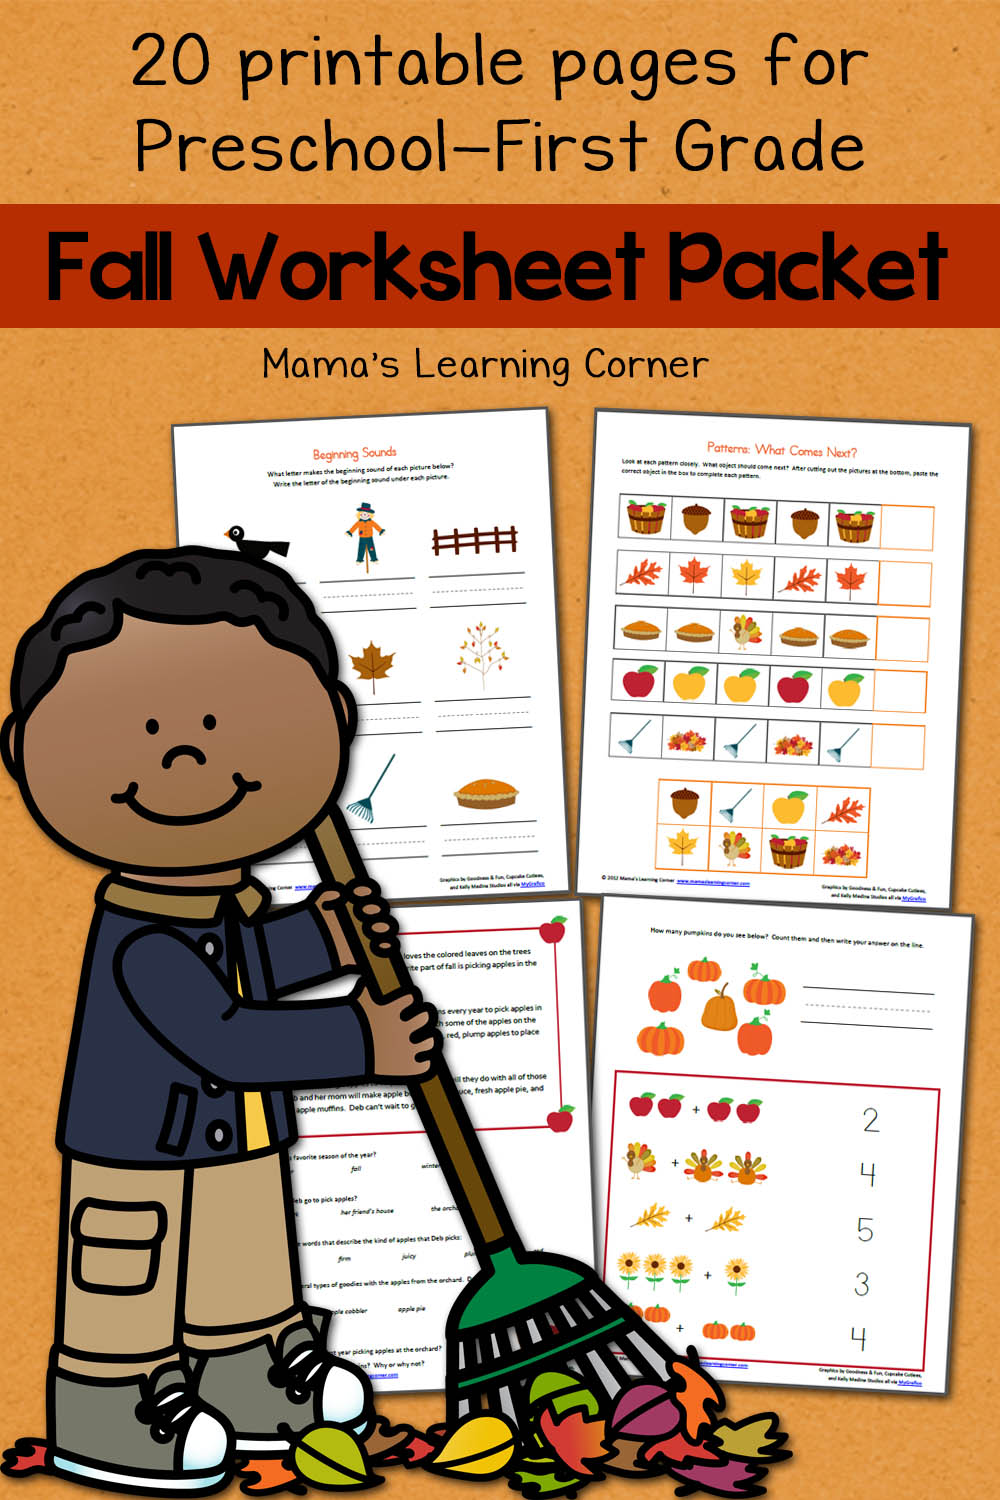 Fall Worksheet Packet for Preschool-First Grade - Mamas Learning Corner